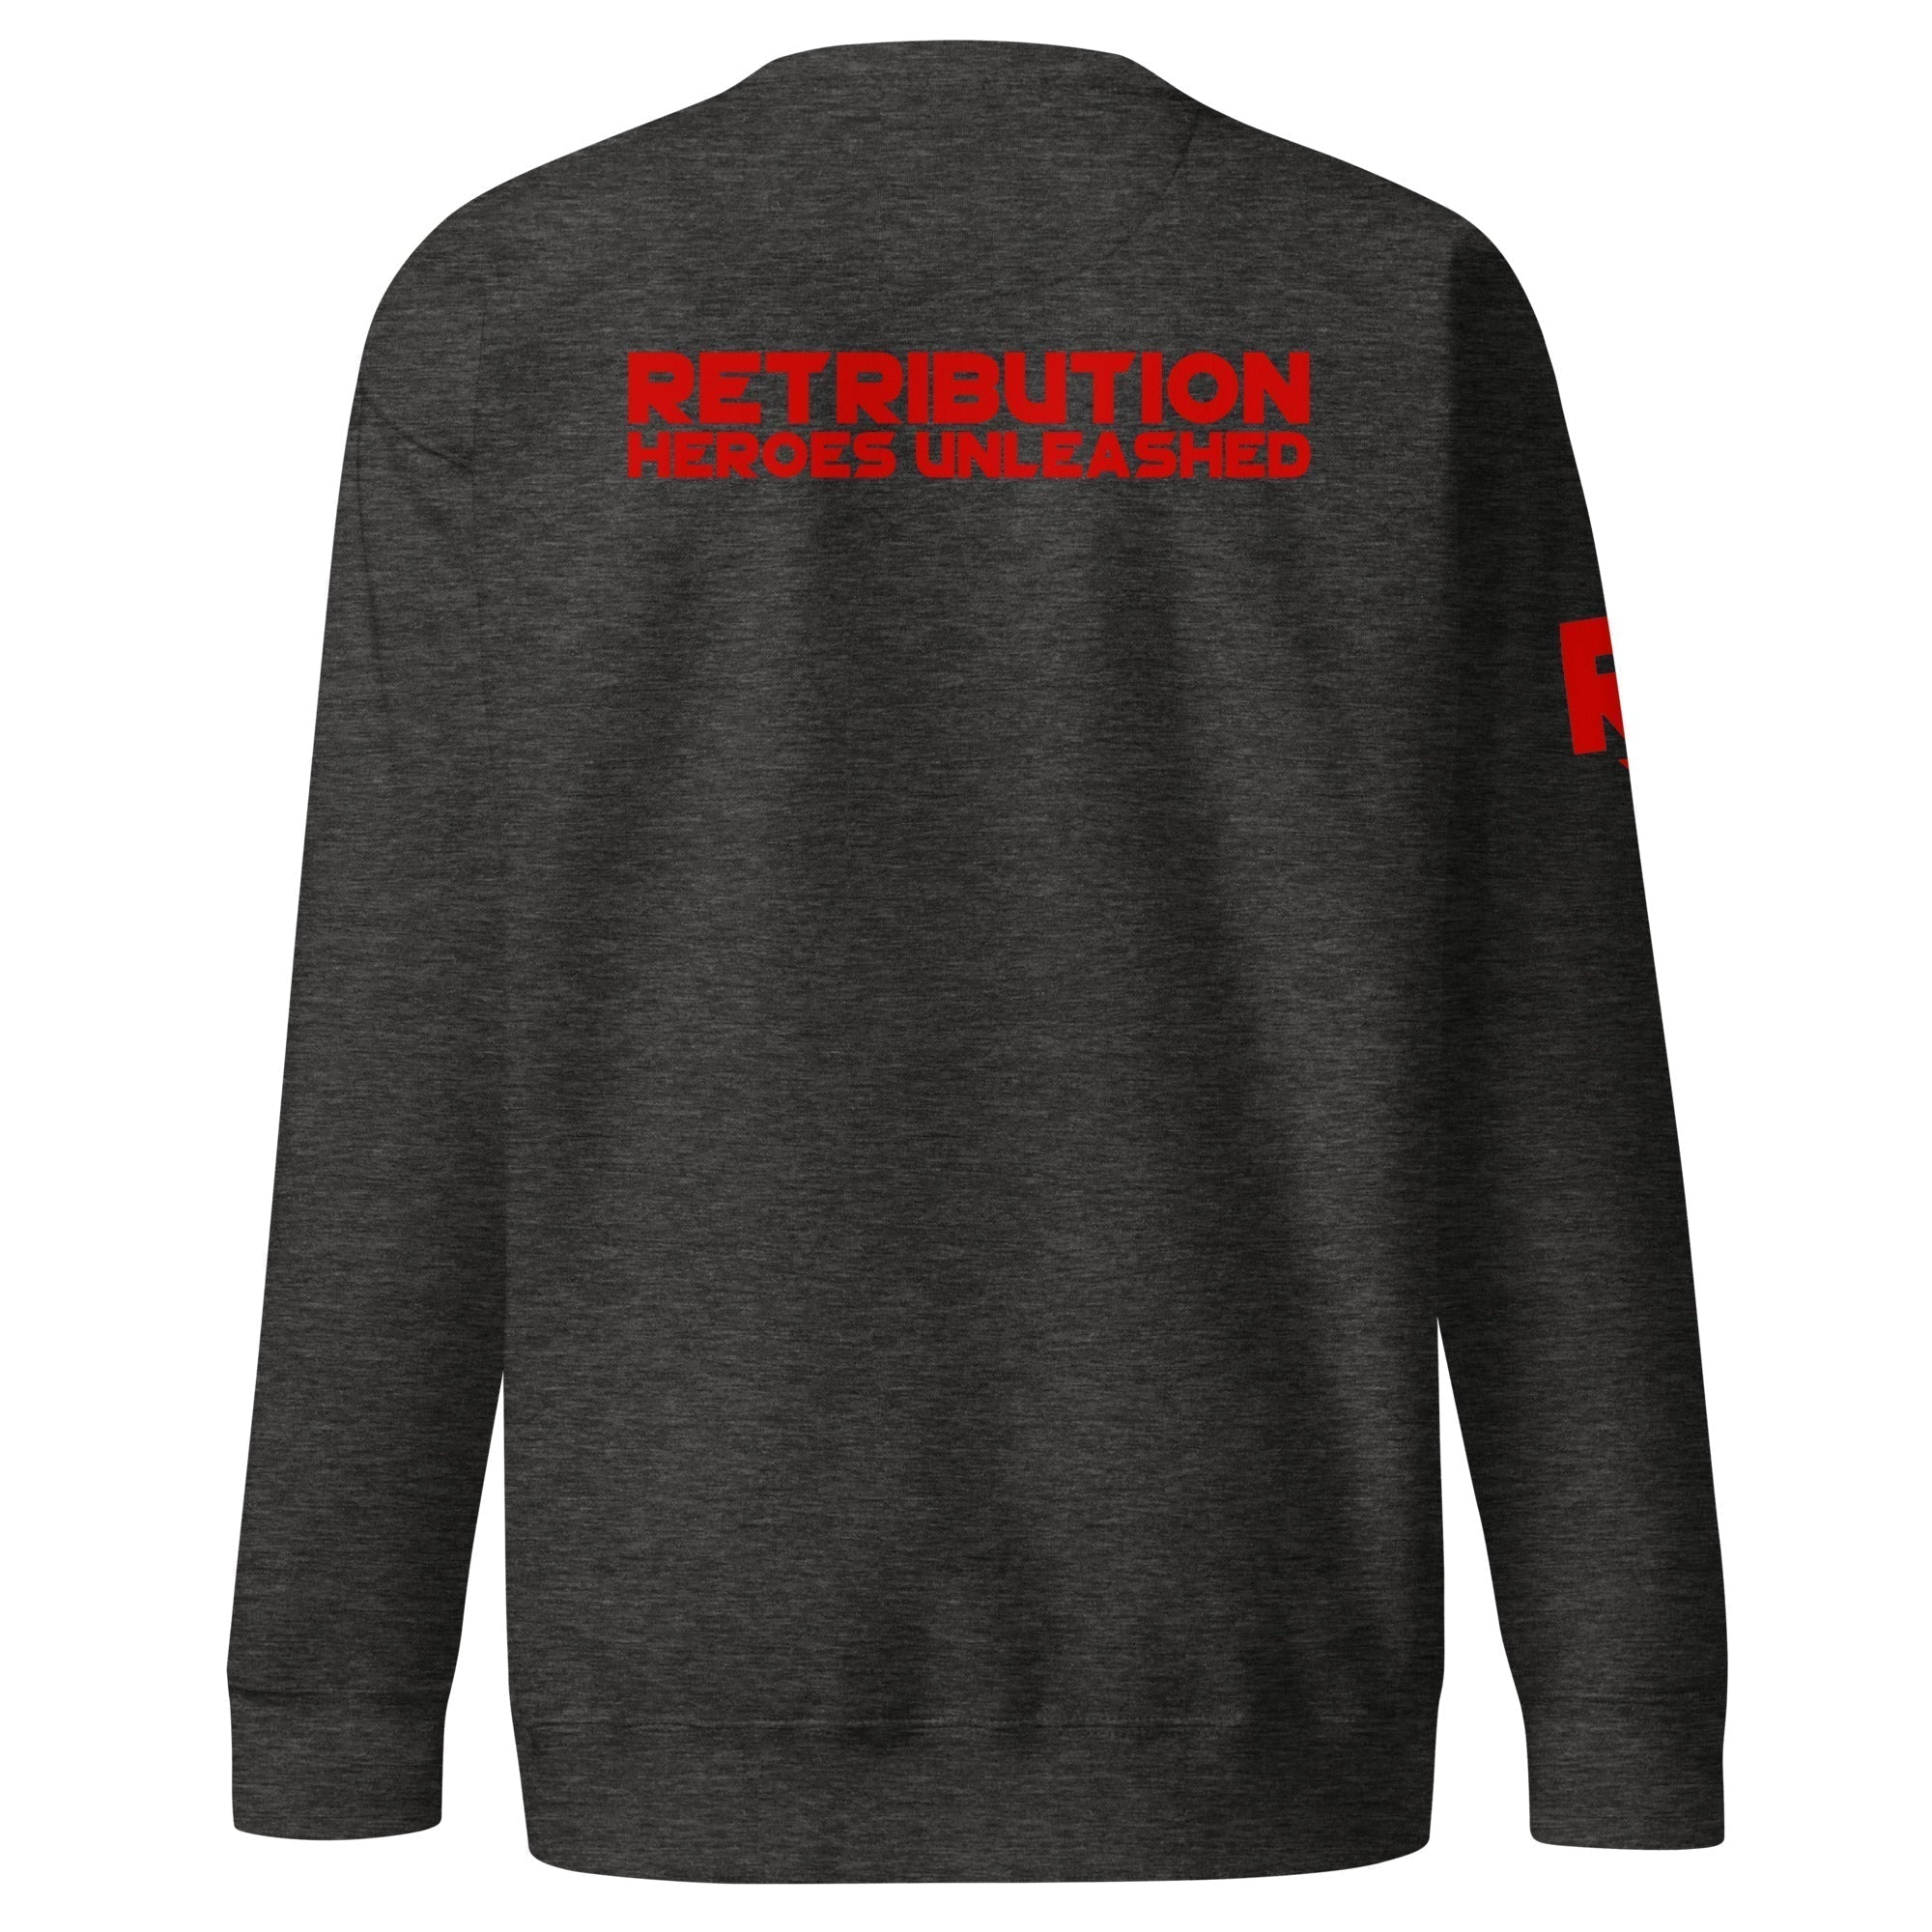 Unisex Premium Sweatshirt - Retribution: Heroes Unleashed v.41 - GRAPHIC T-SHIRTS